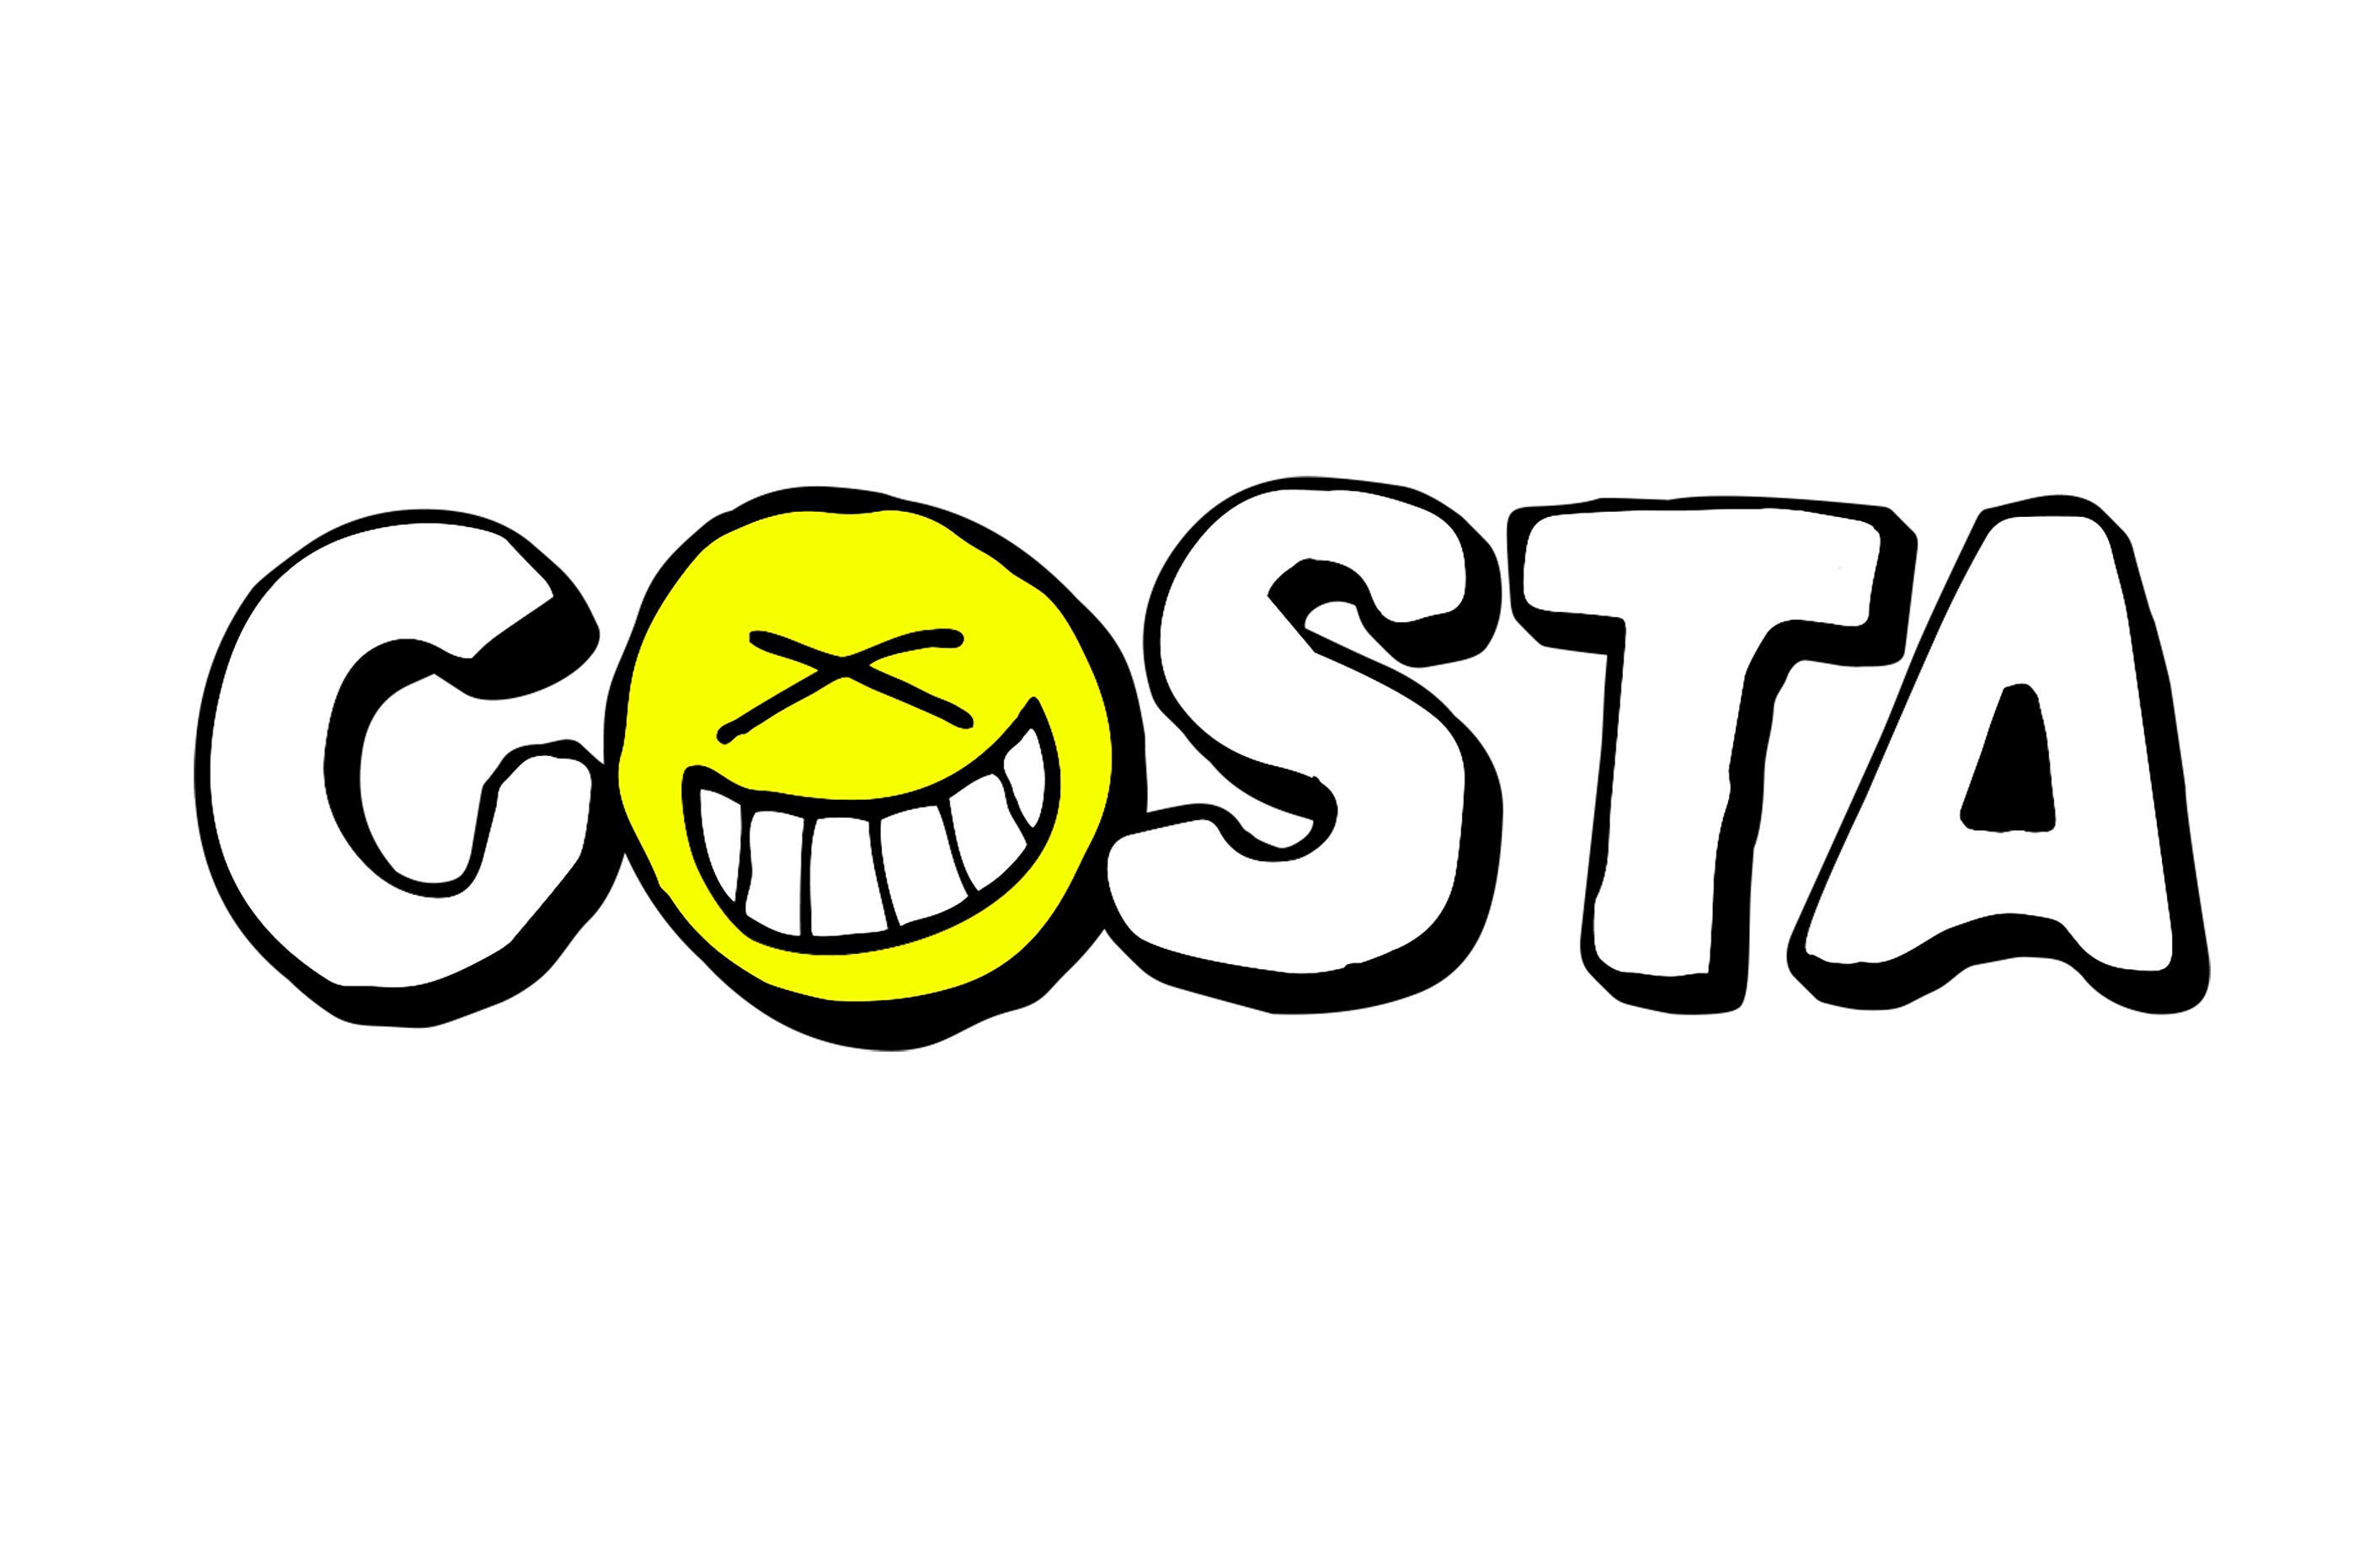 DJ Costa presale information on freepresalepasswords.com